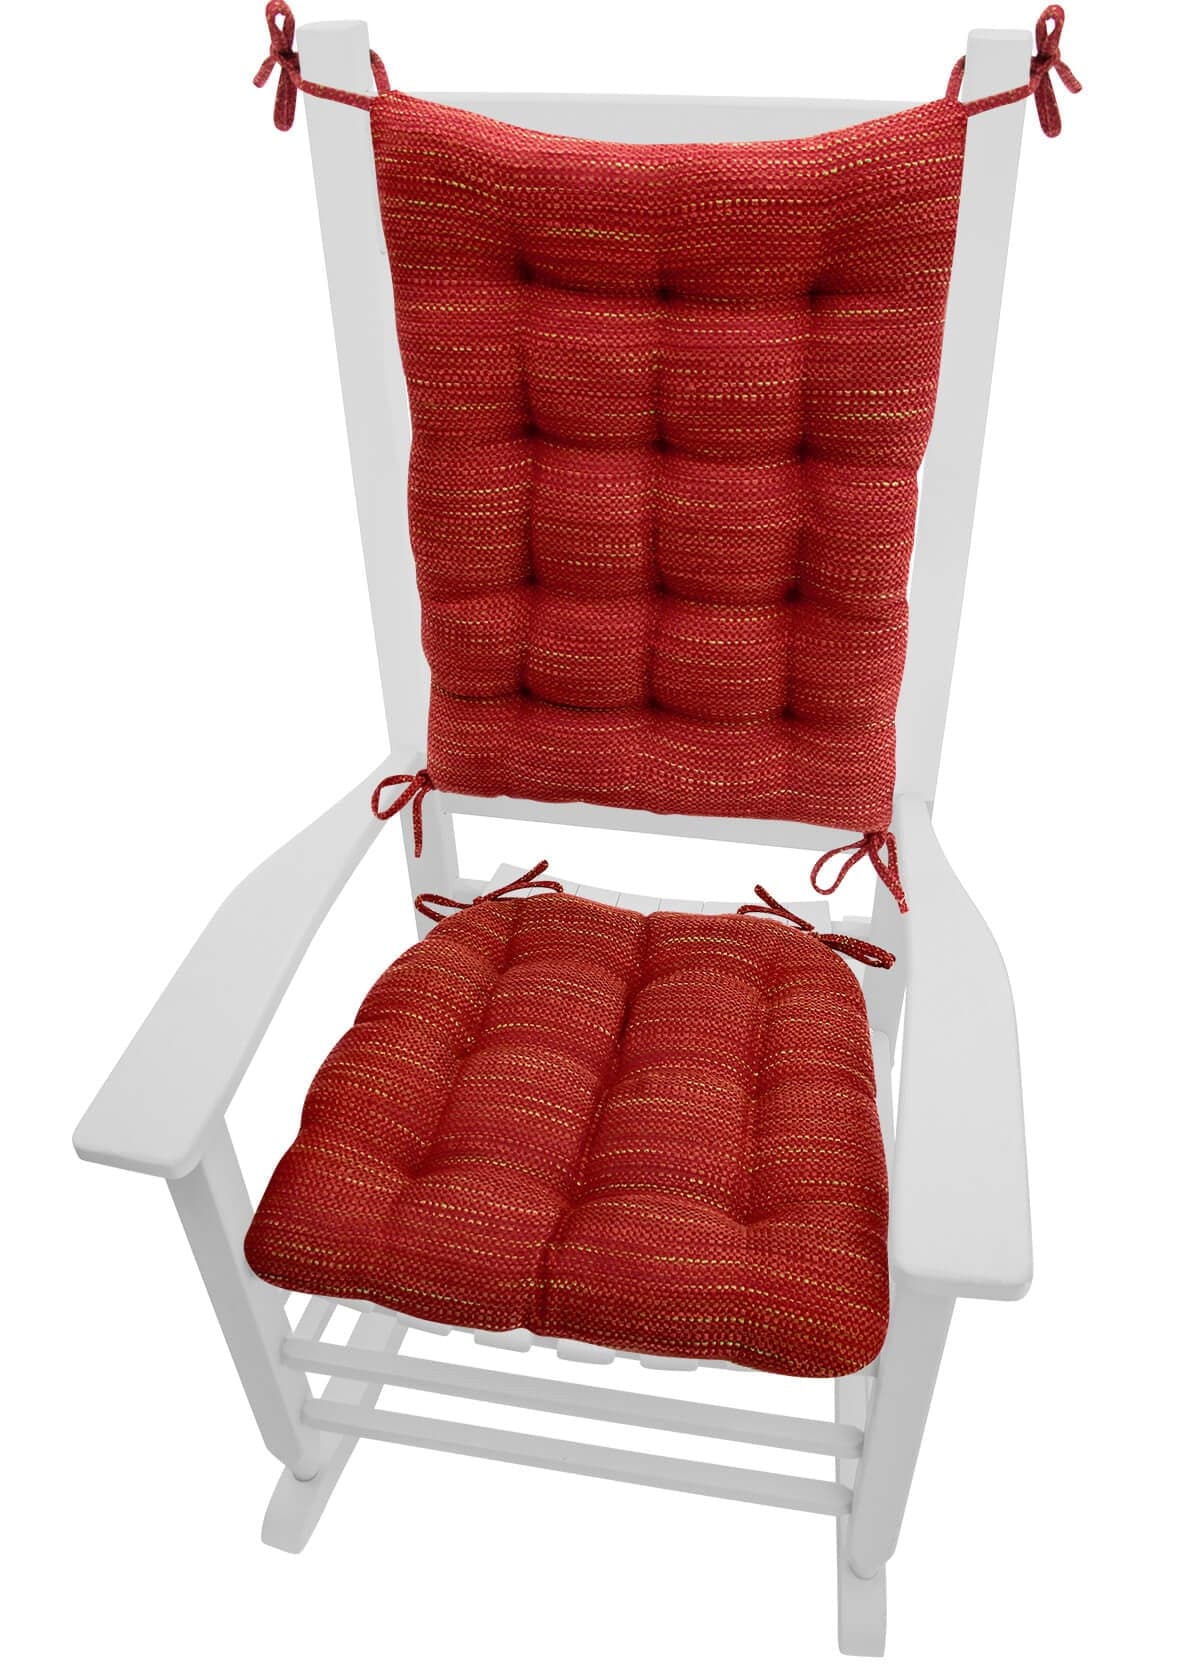 Brisbane Red Rocking Chair Cushions - Barnett Home Decor - Red